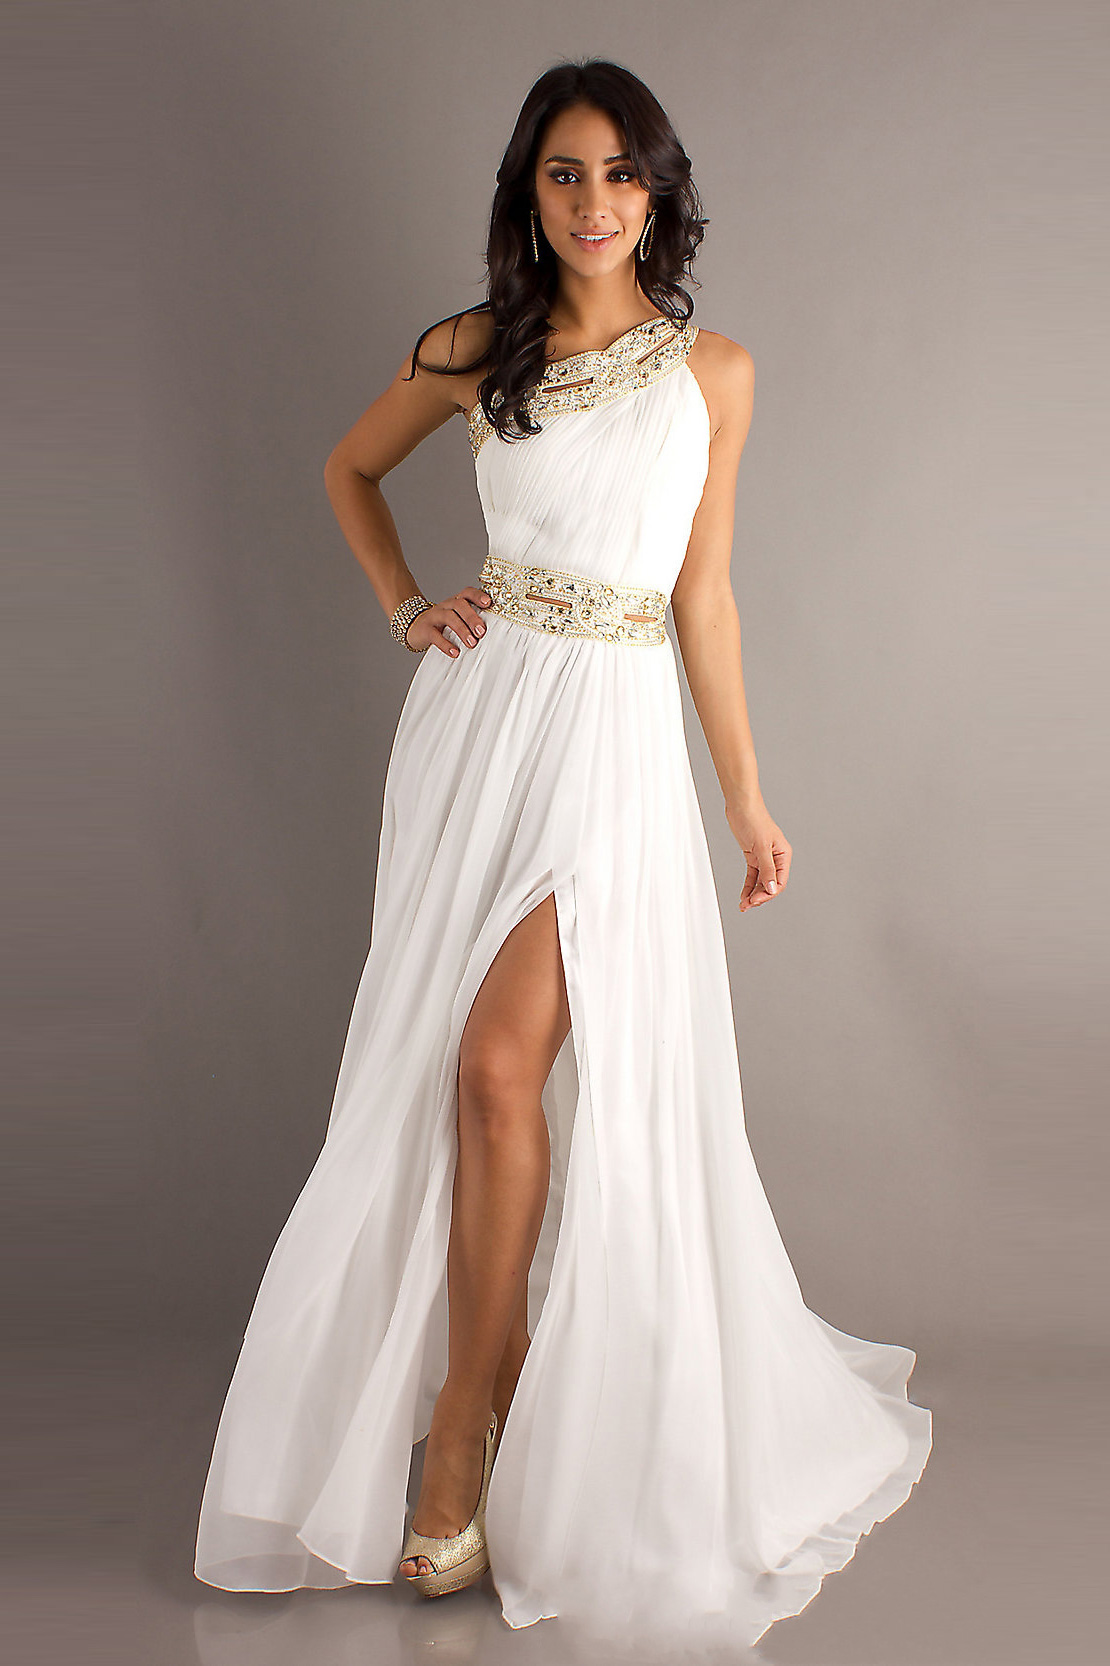 Prom Dresses White